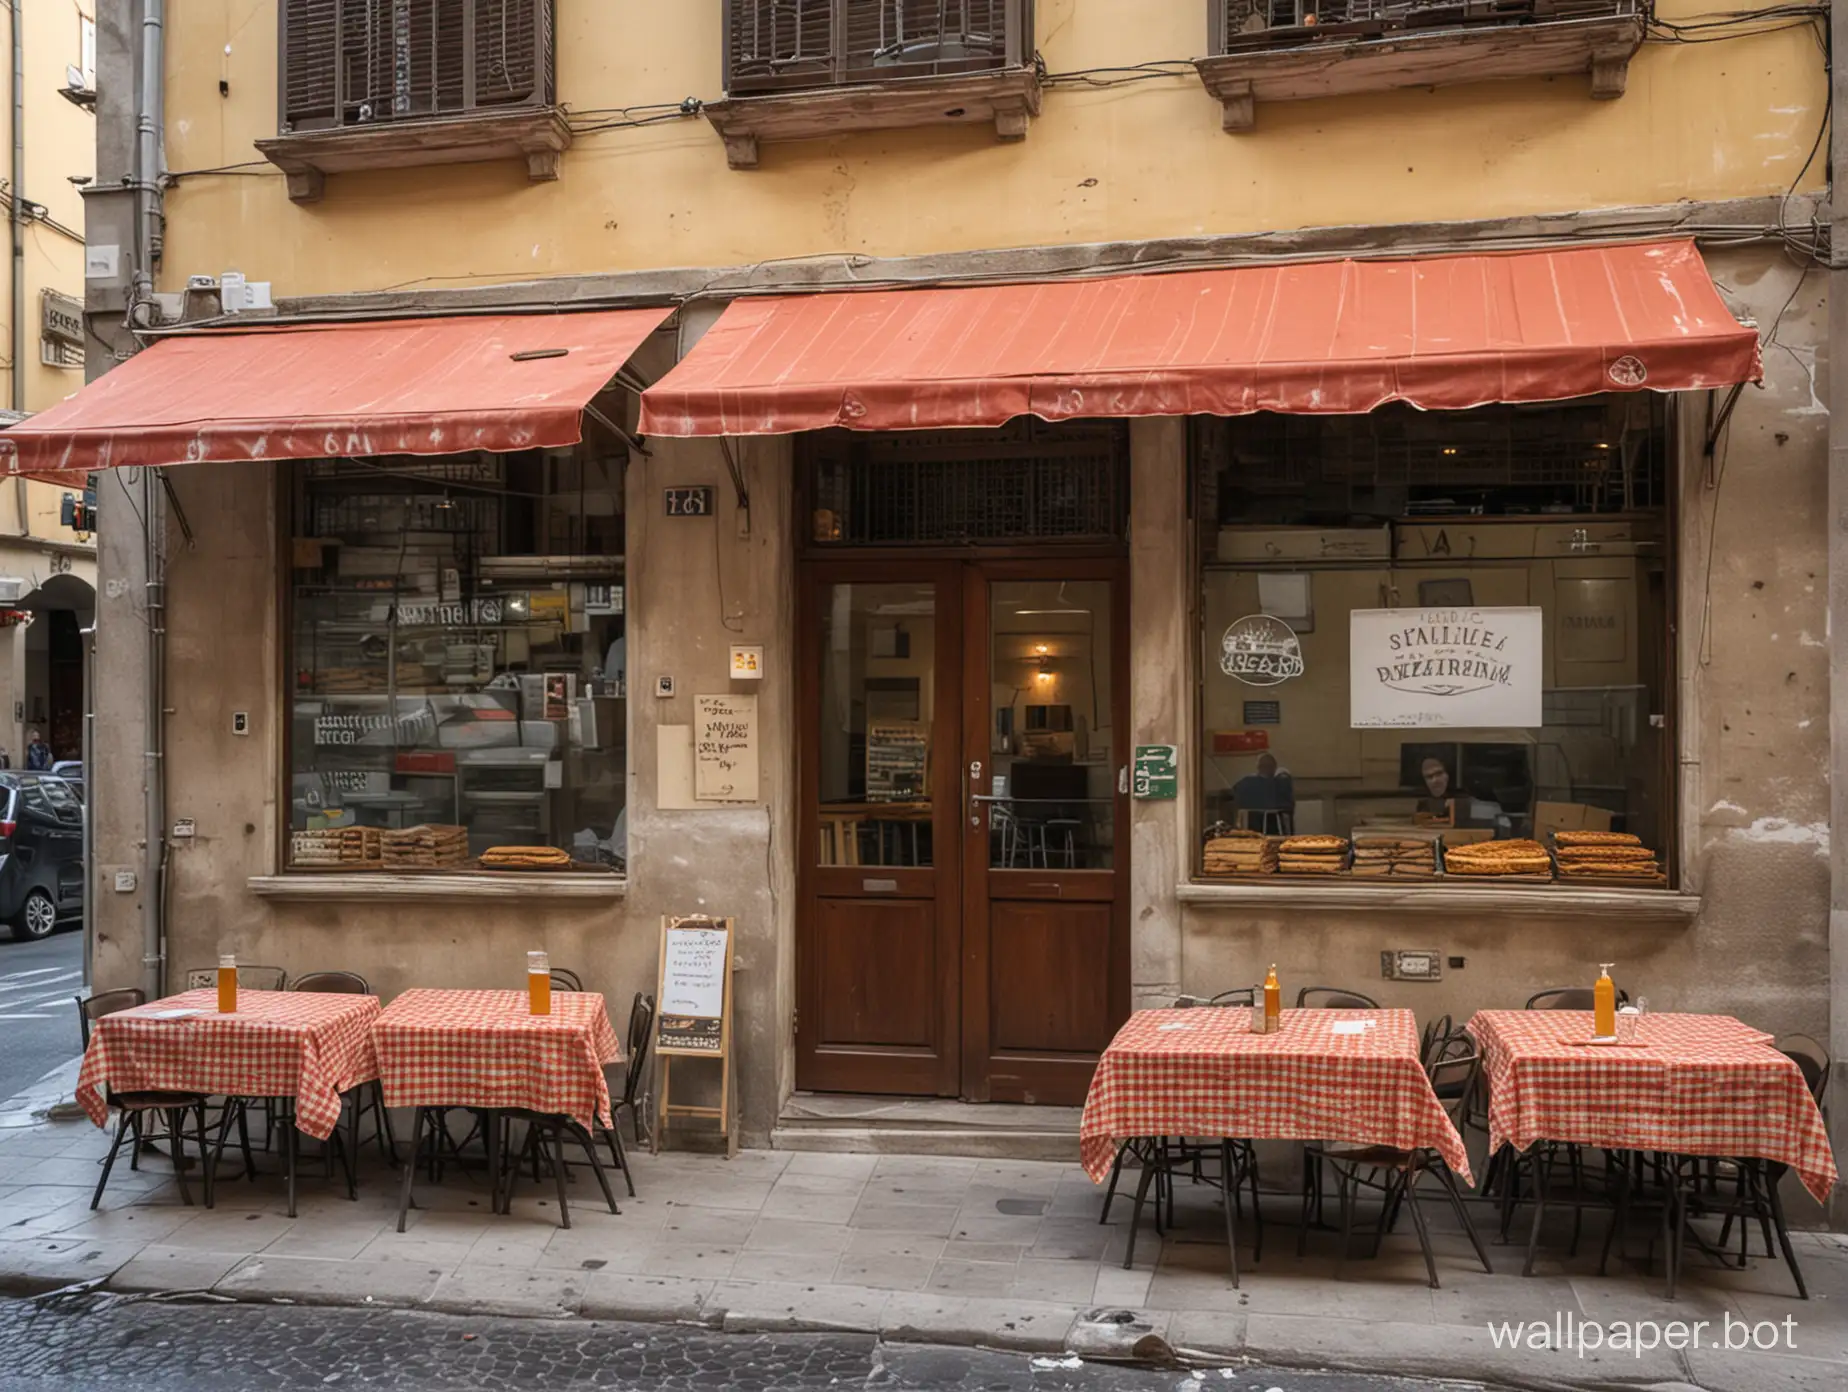 Authentic-Italian-Pizza-Restaurant-in-Naples-Italy